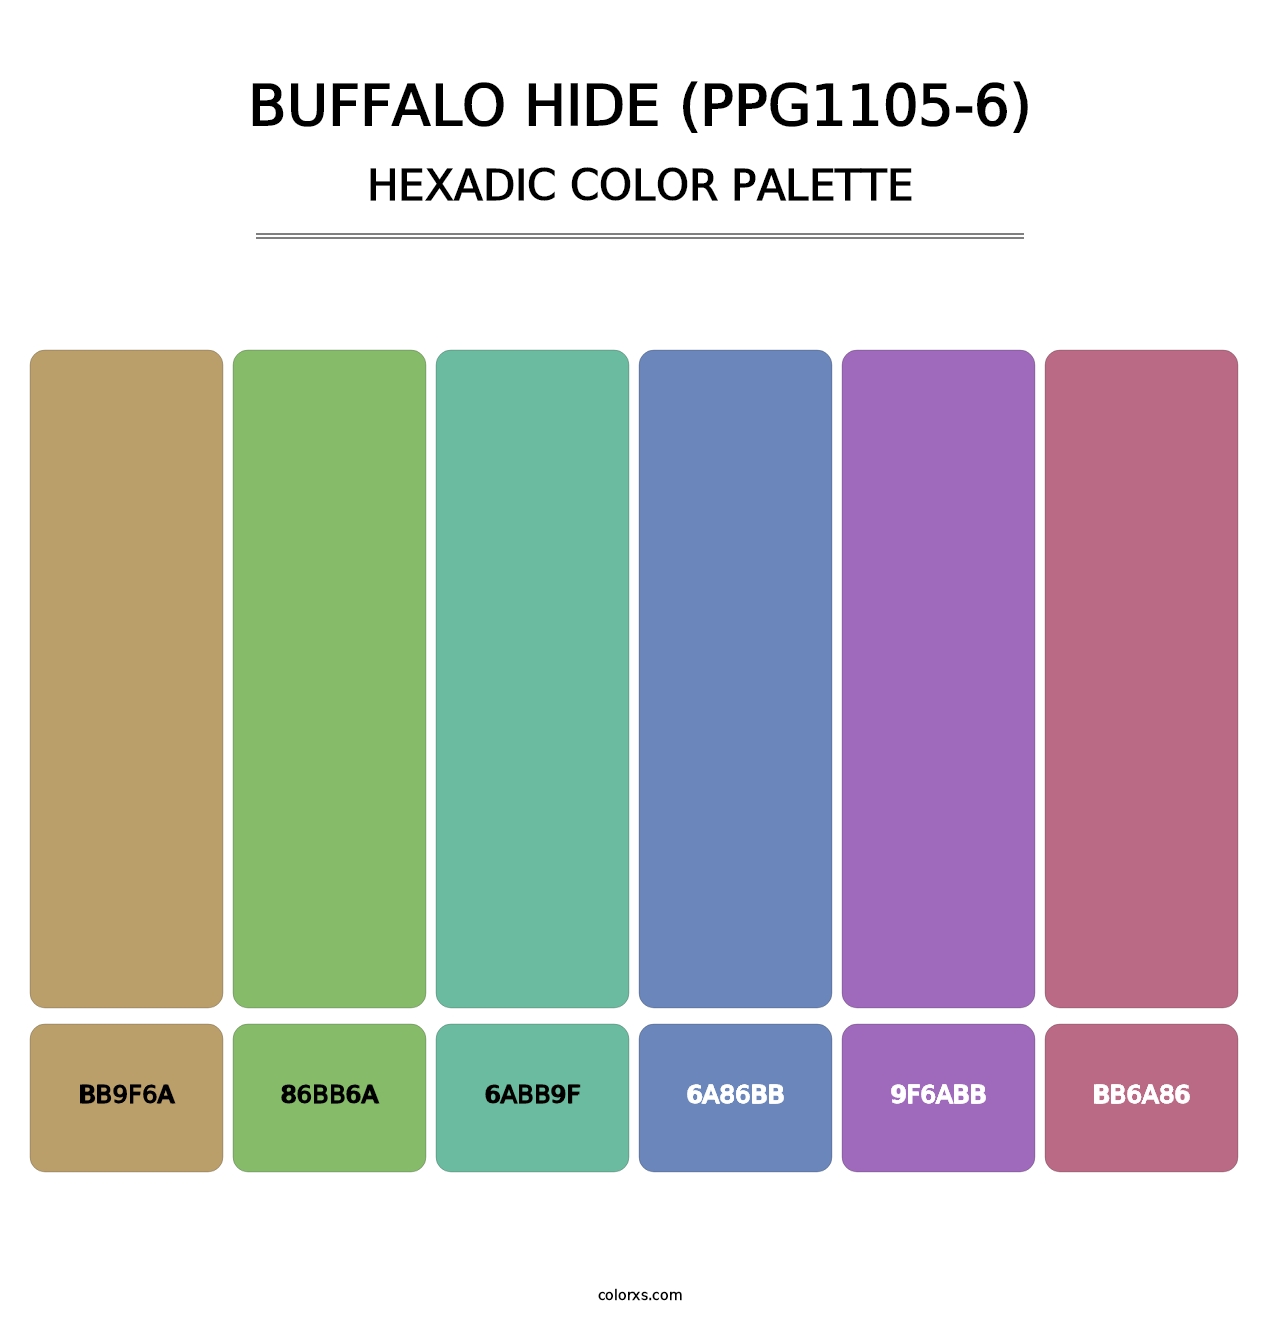 Buffalo Hide (PPG1105-6) - Hexadic Color Palette